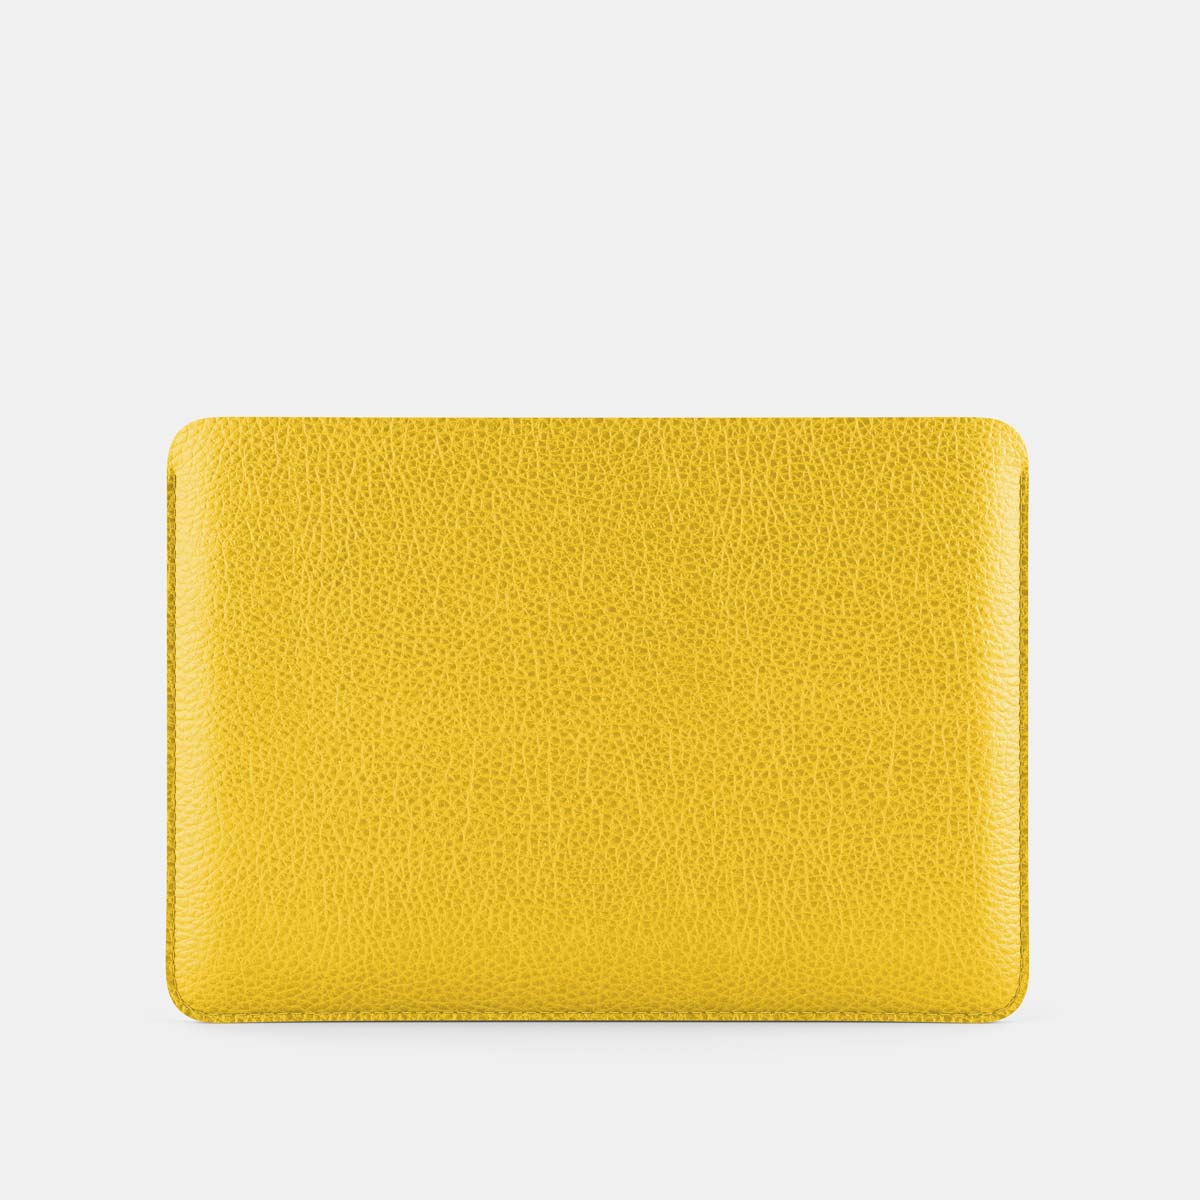 Leather iPad Sleeve - Yellow and Grey